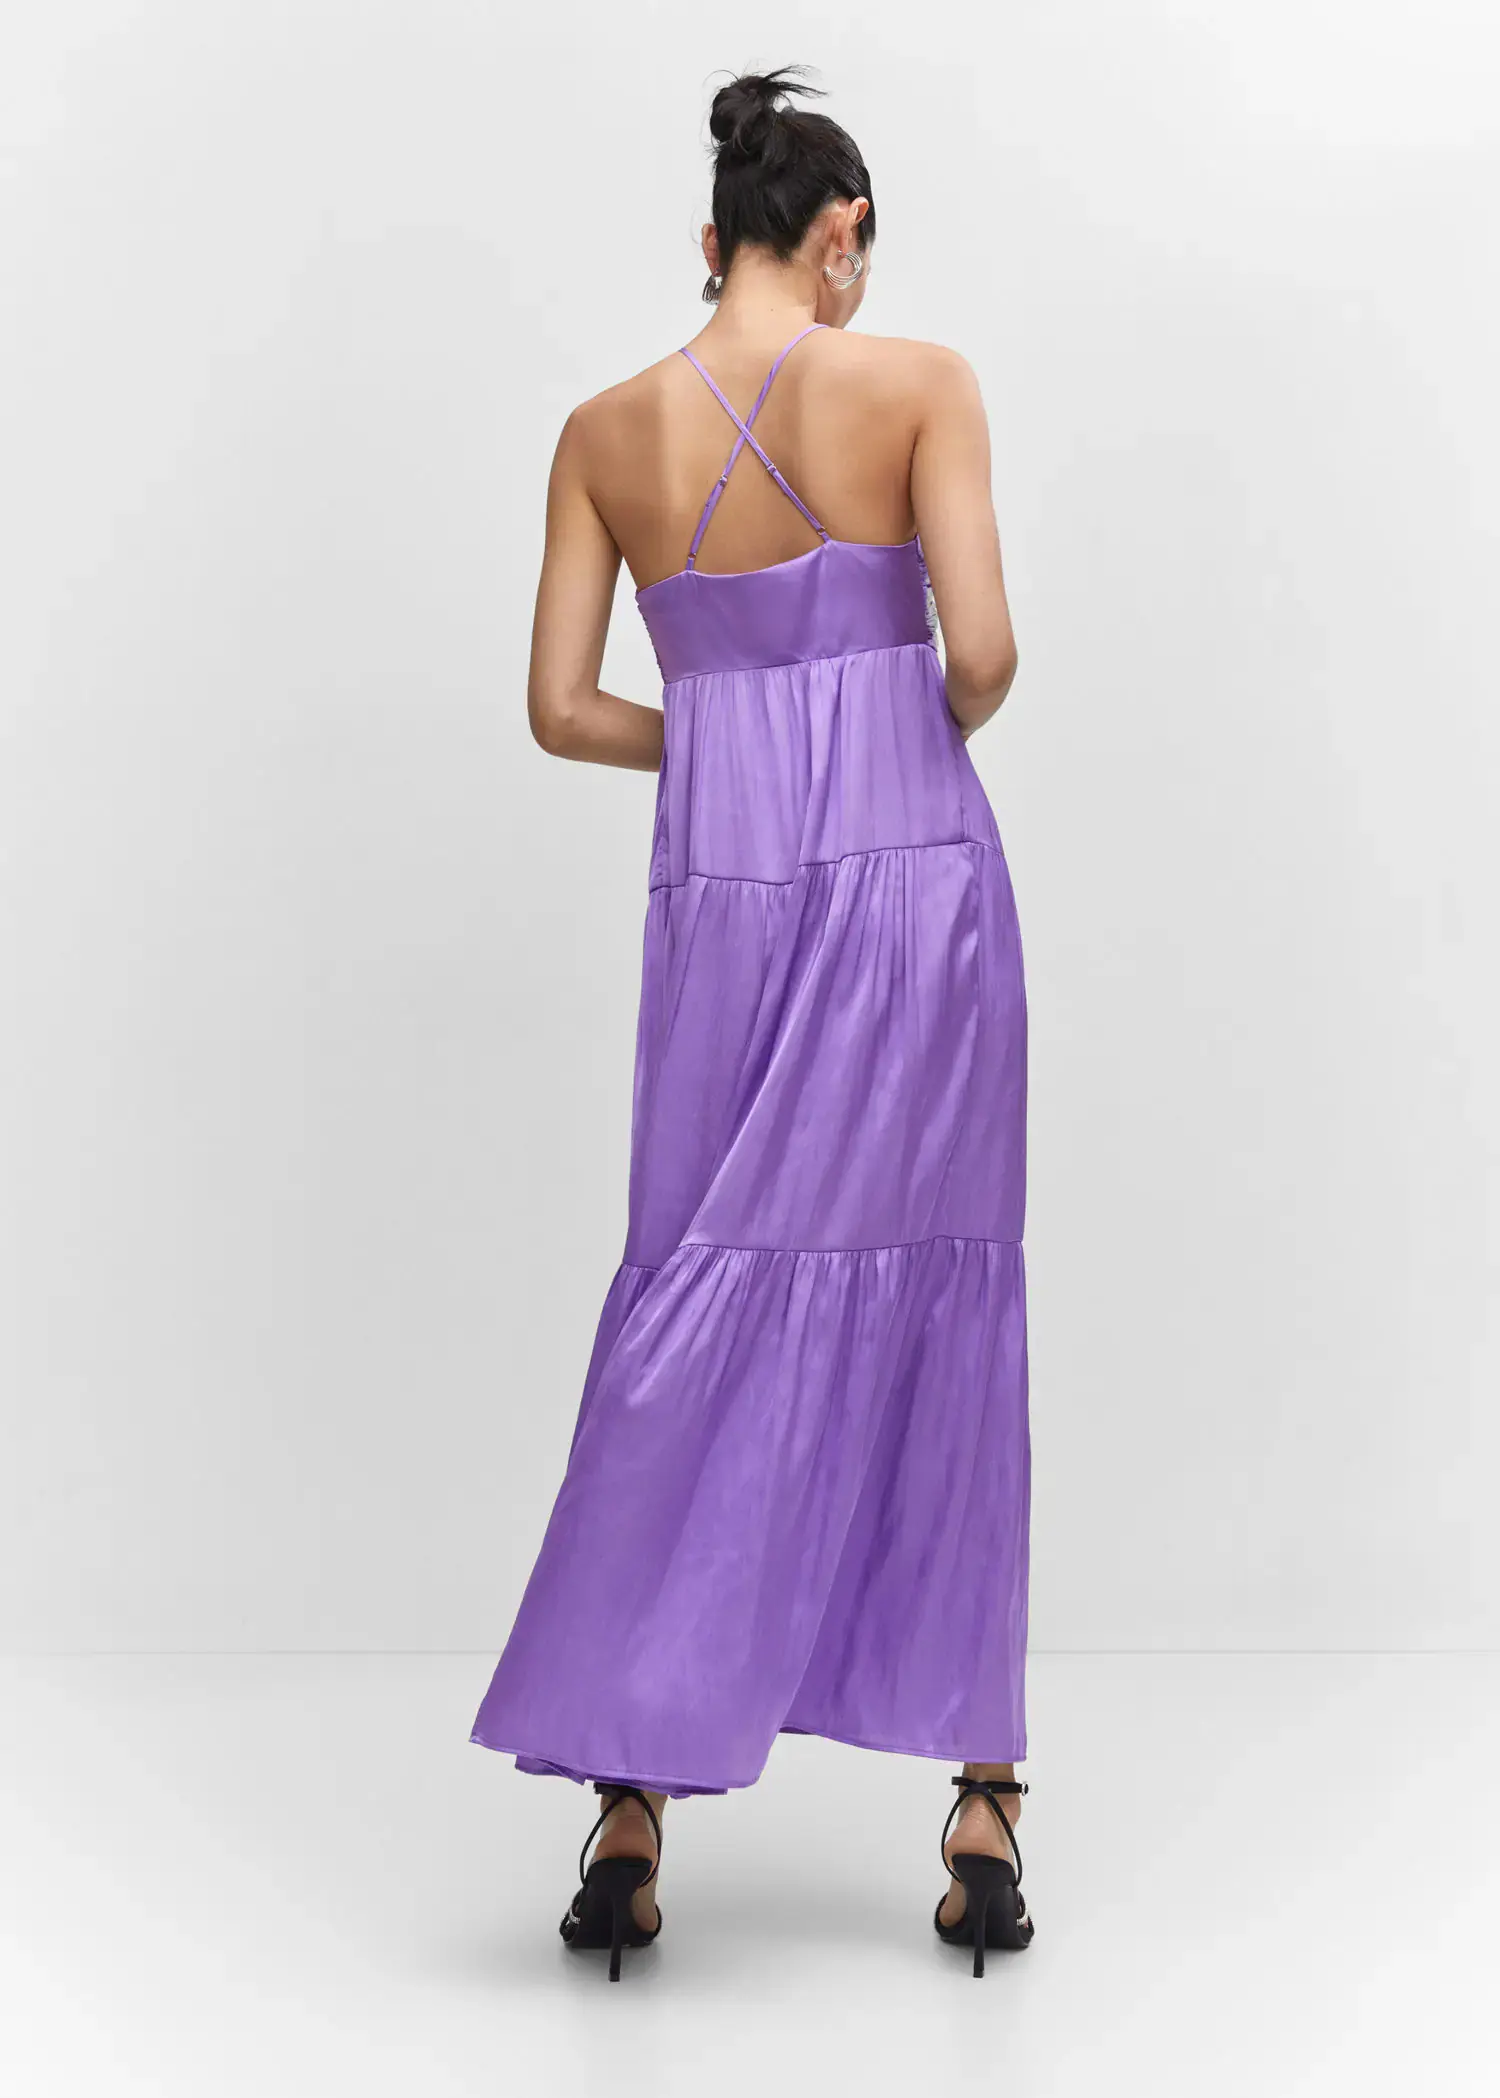 Mango Ruched satin dress. a woman wearing a long purple dress standing next to a wall. 